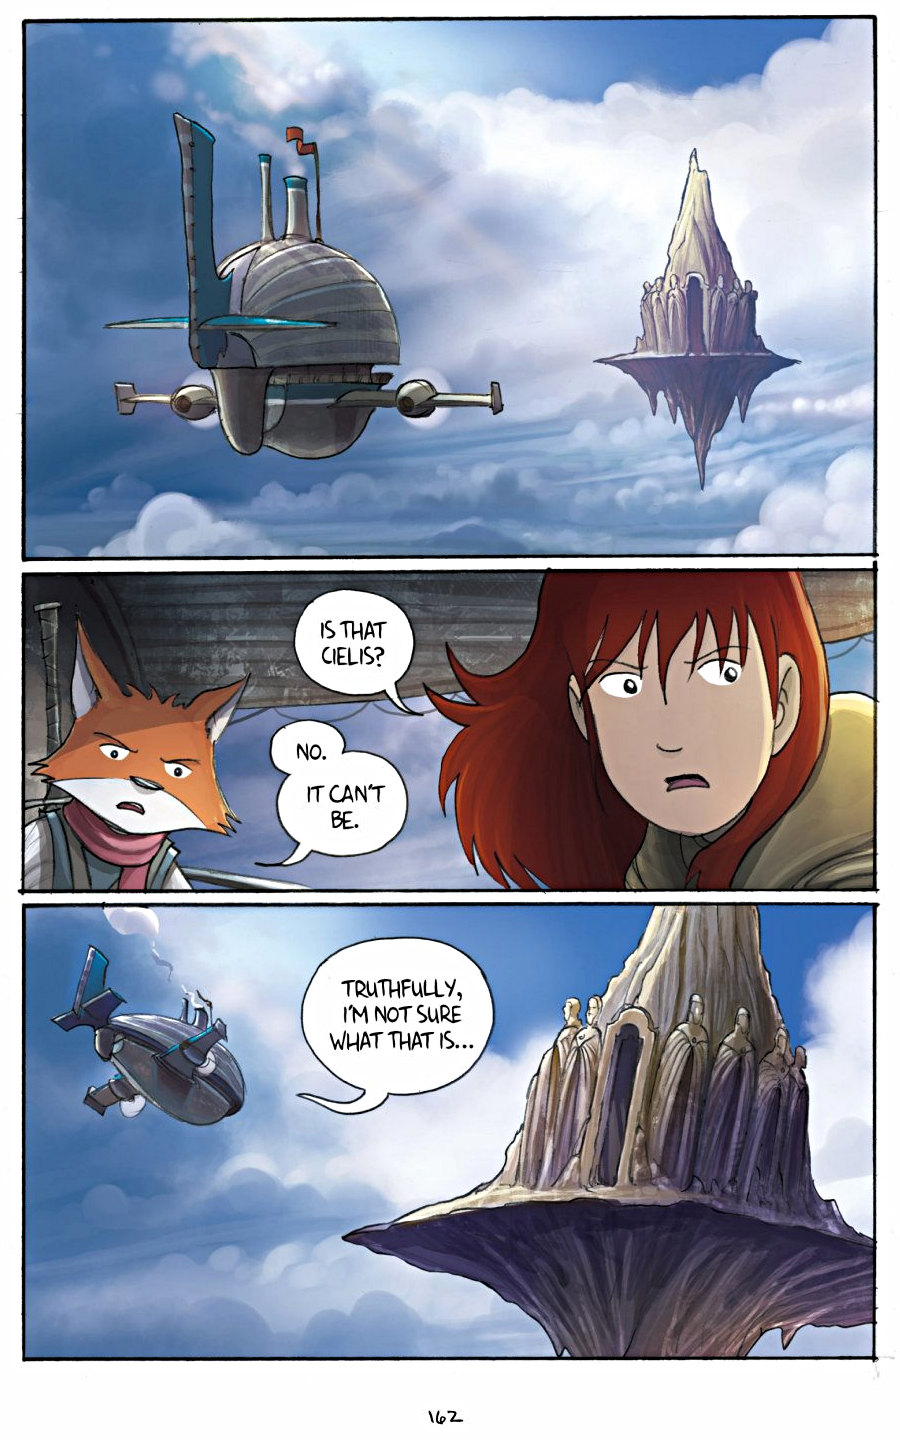 page 162 of amulet 3 cloud searchers graphic novel by kazu kibuishi